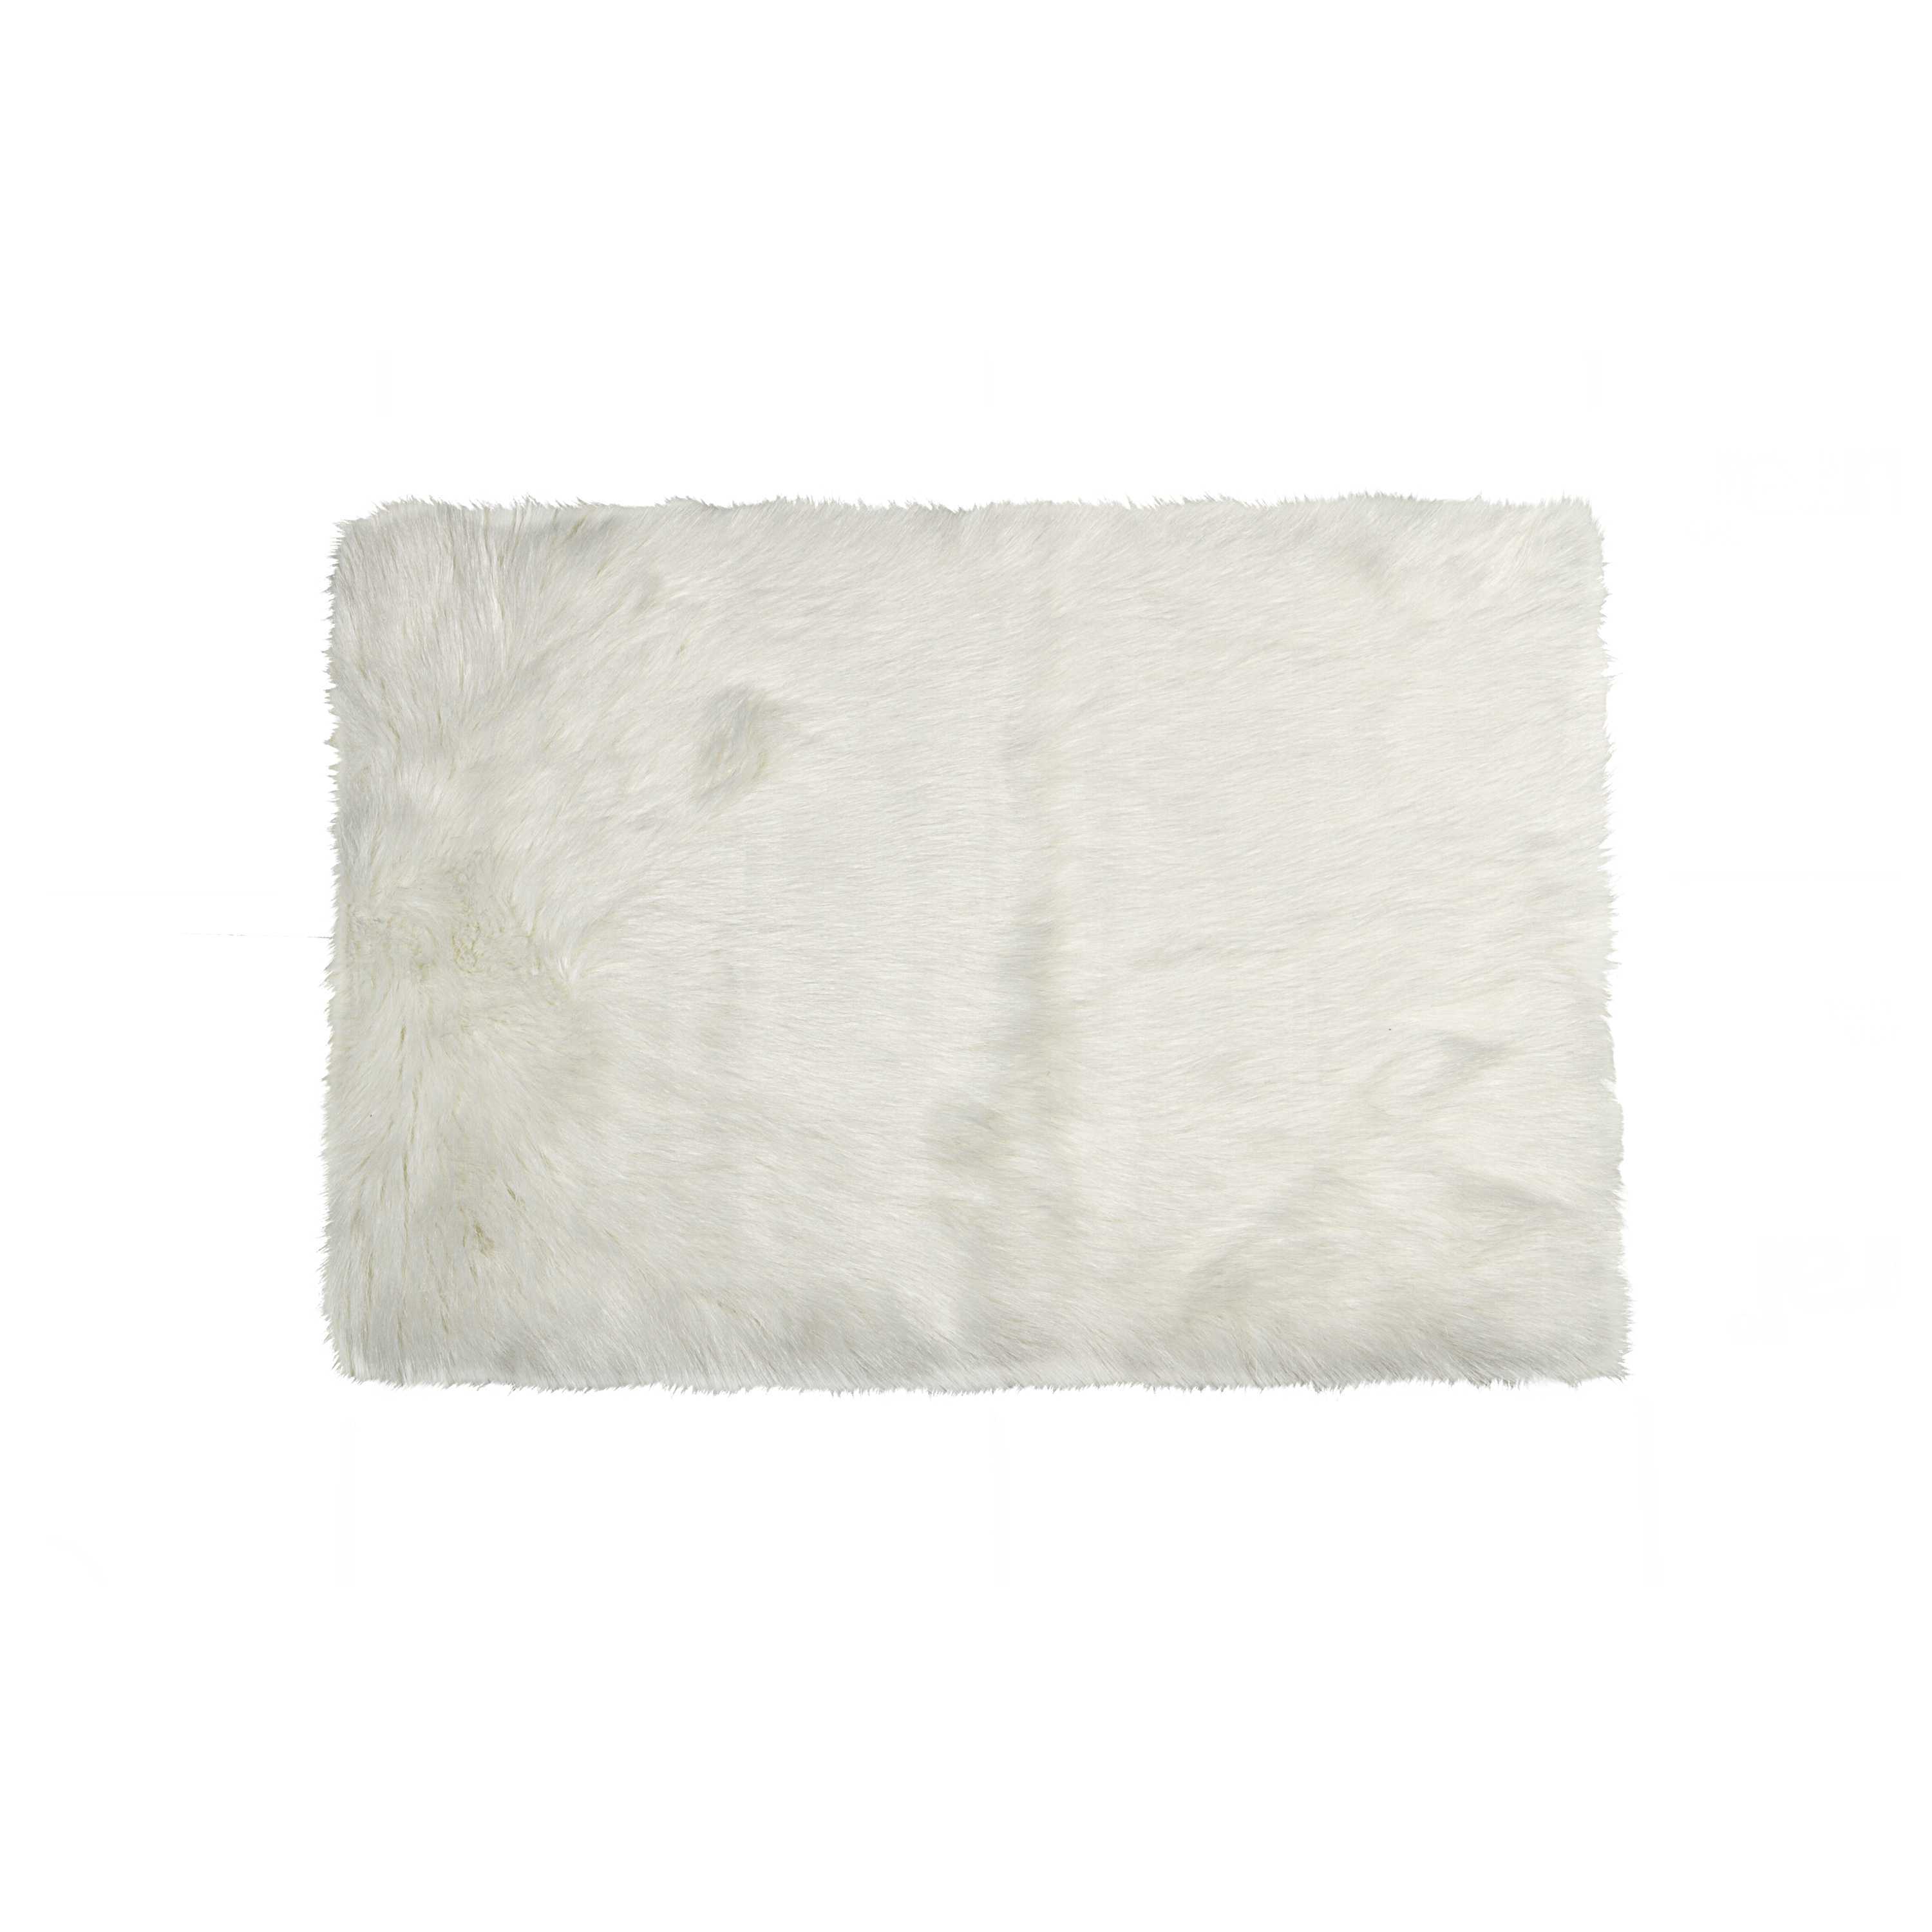 5' x 8' Off White Faux Fur Rectangular Area Rug